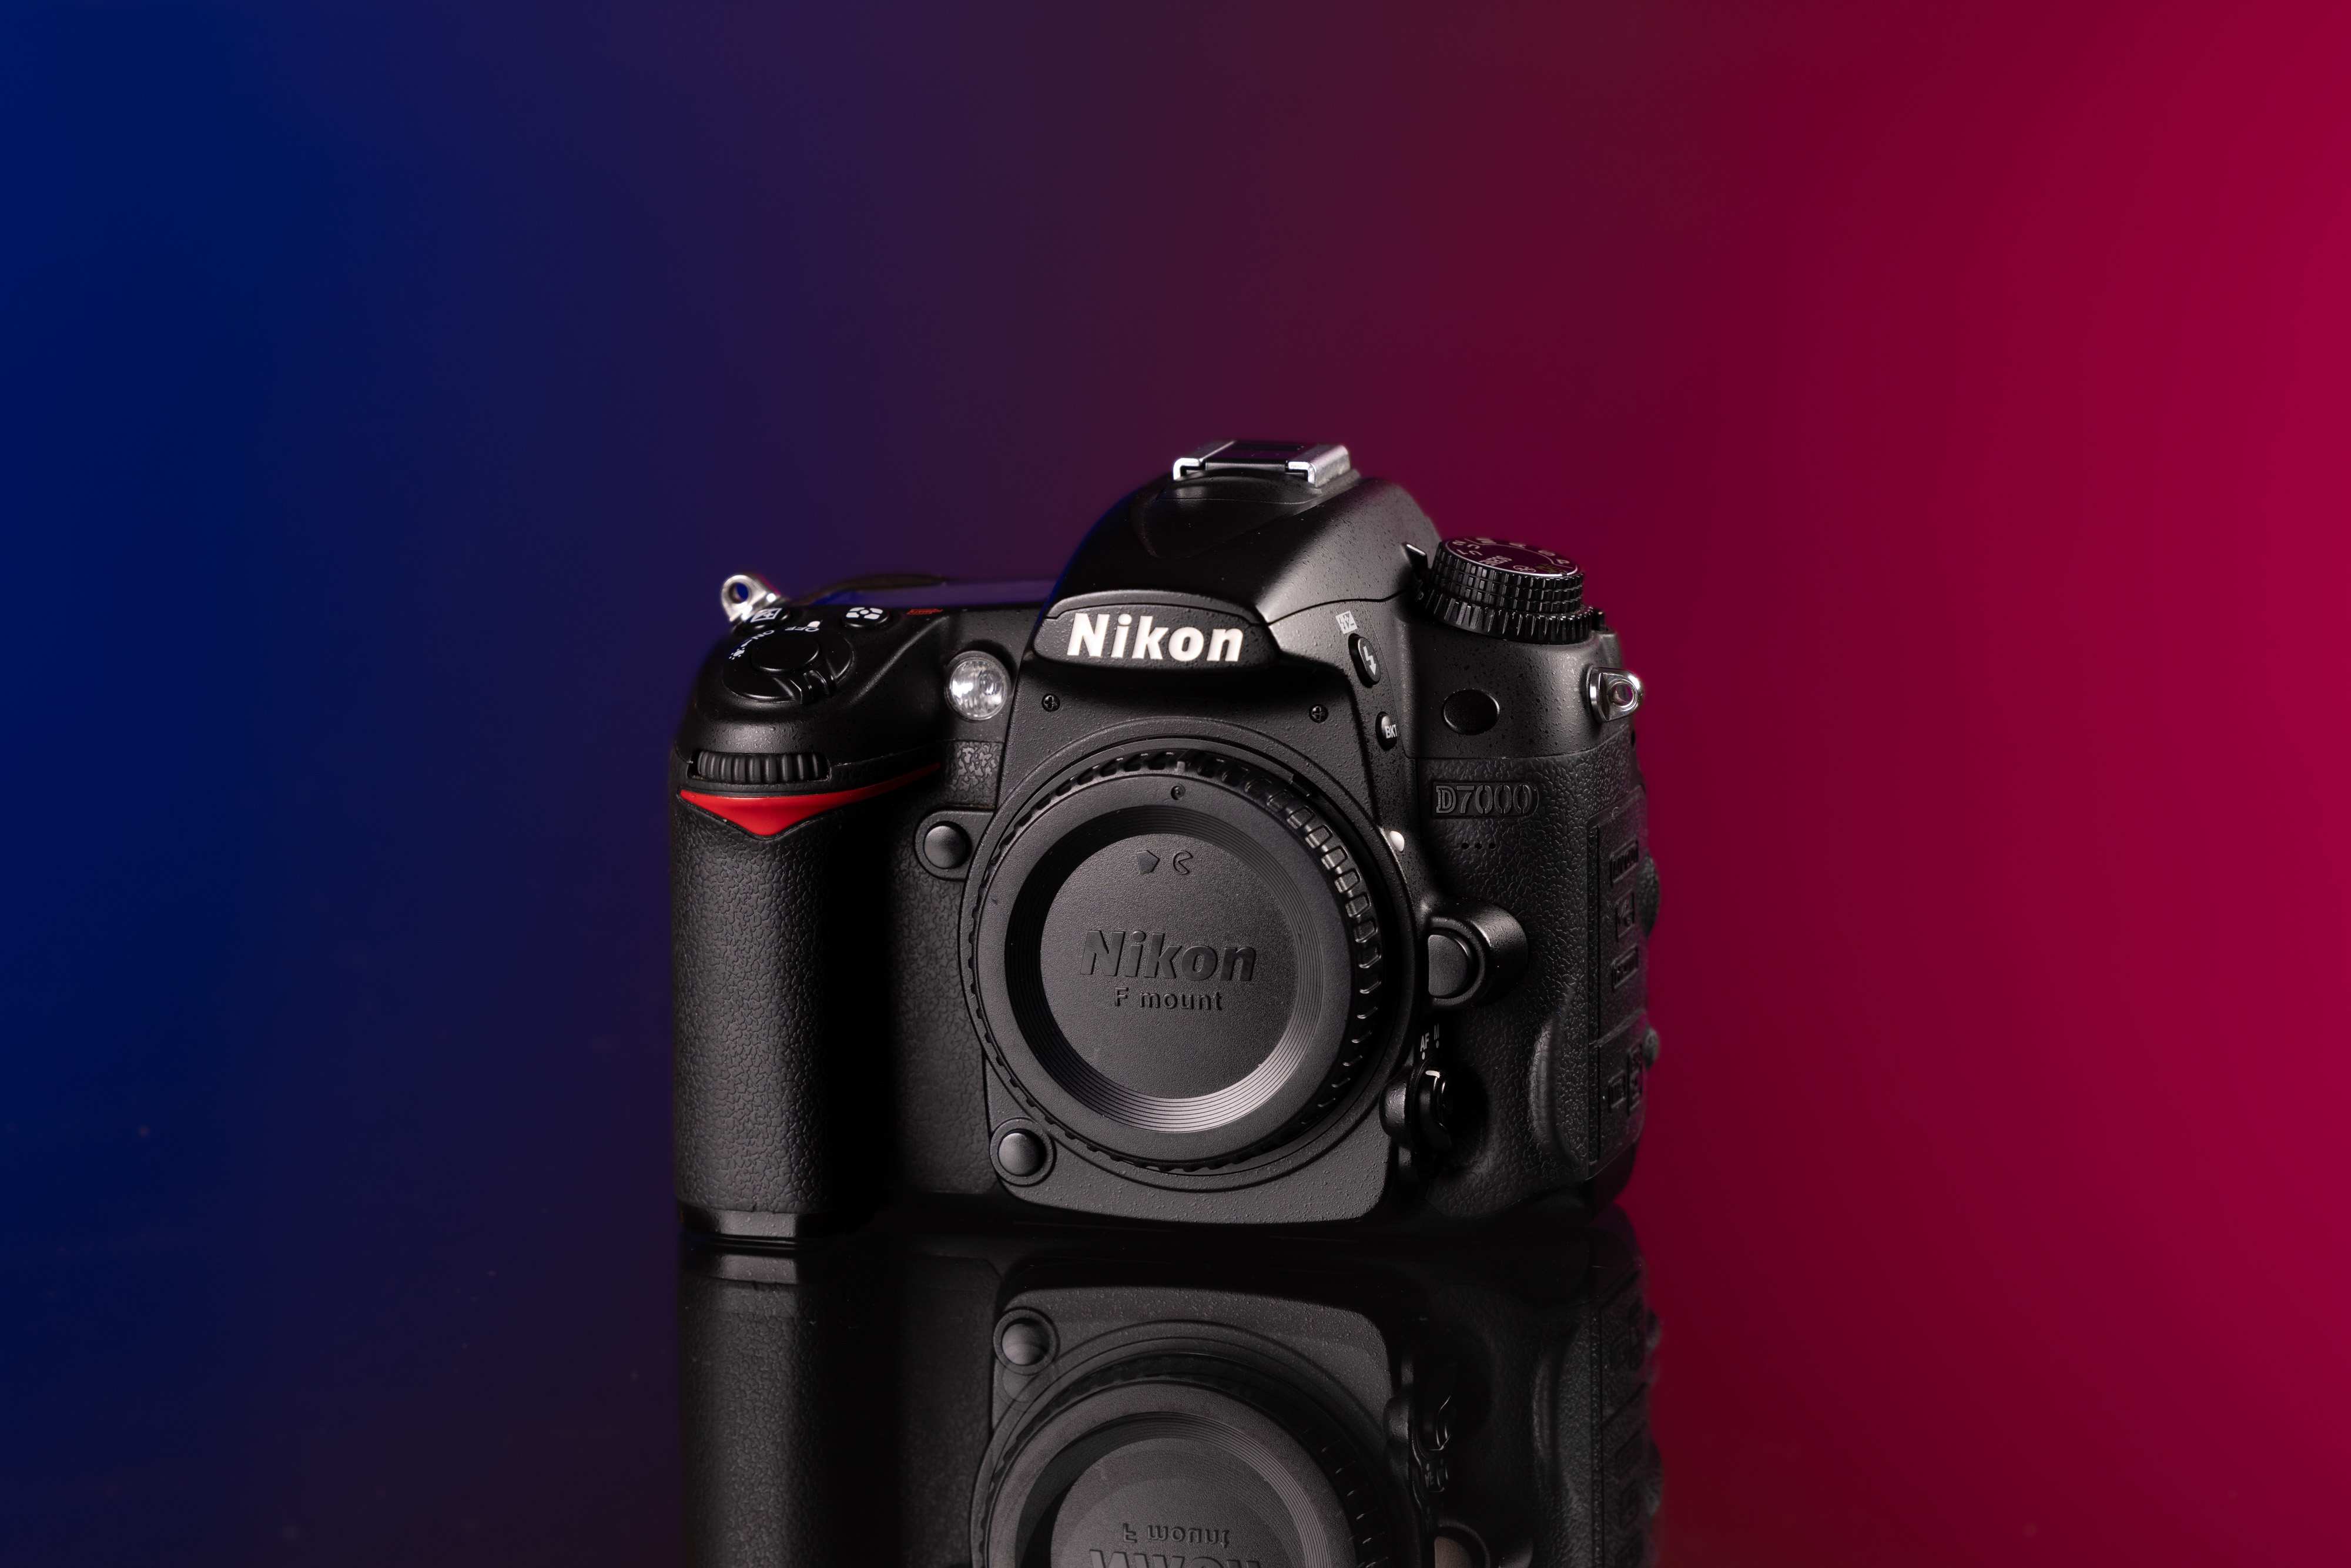 Review: Nikon D7000 APS-C DSLR Camera | MPB